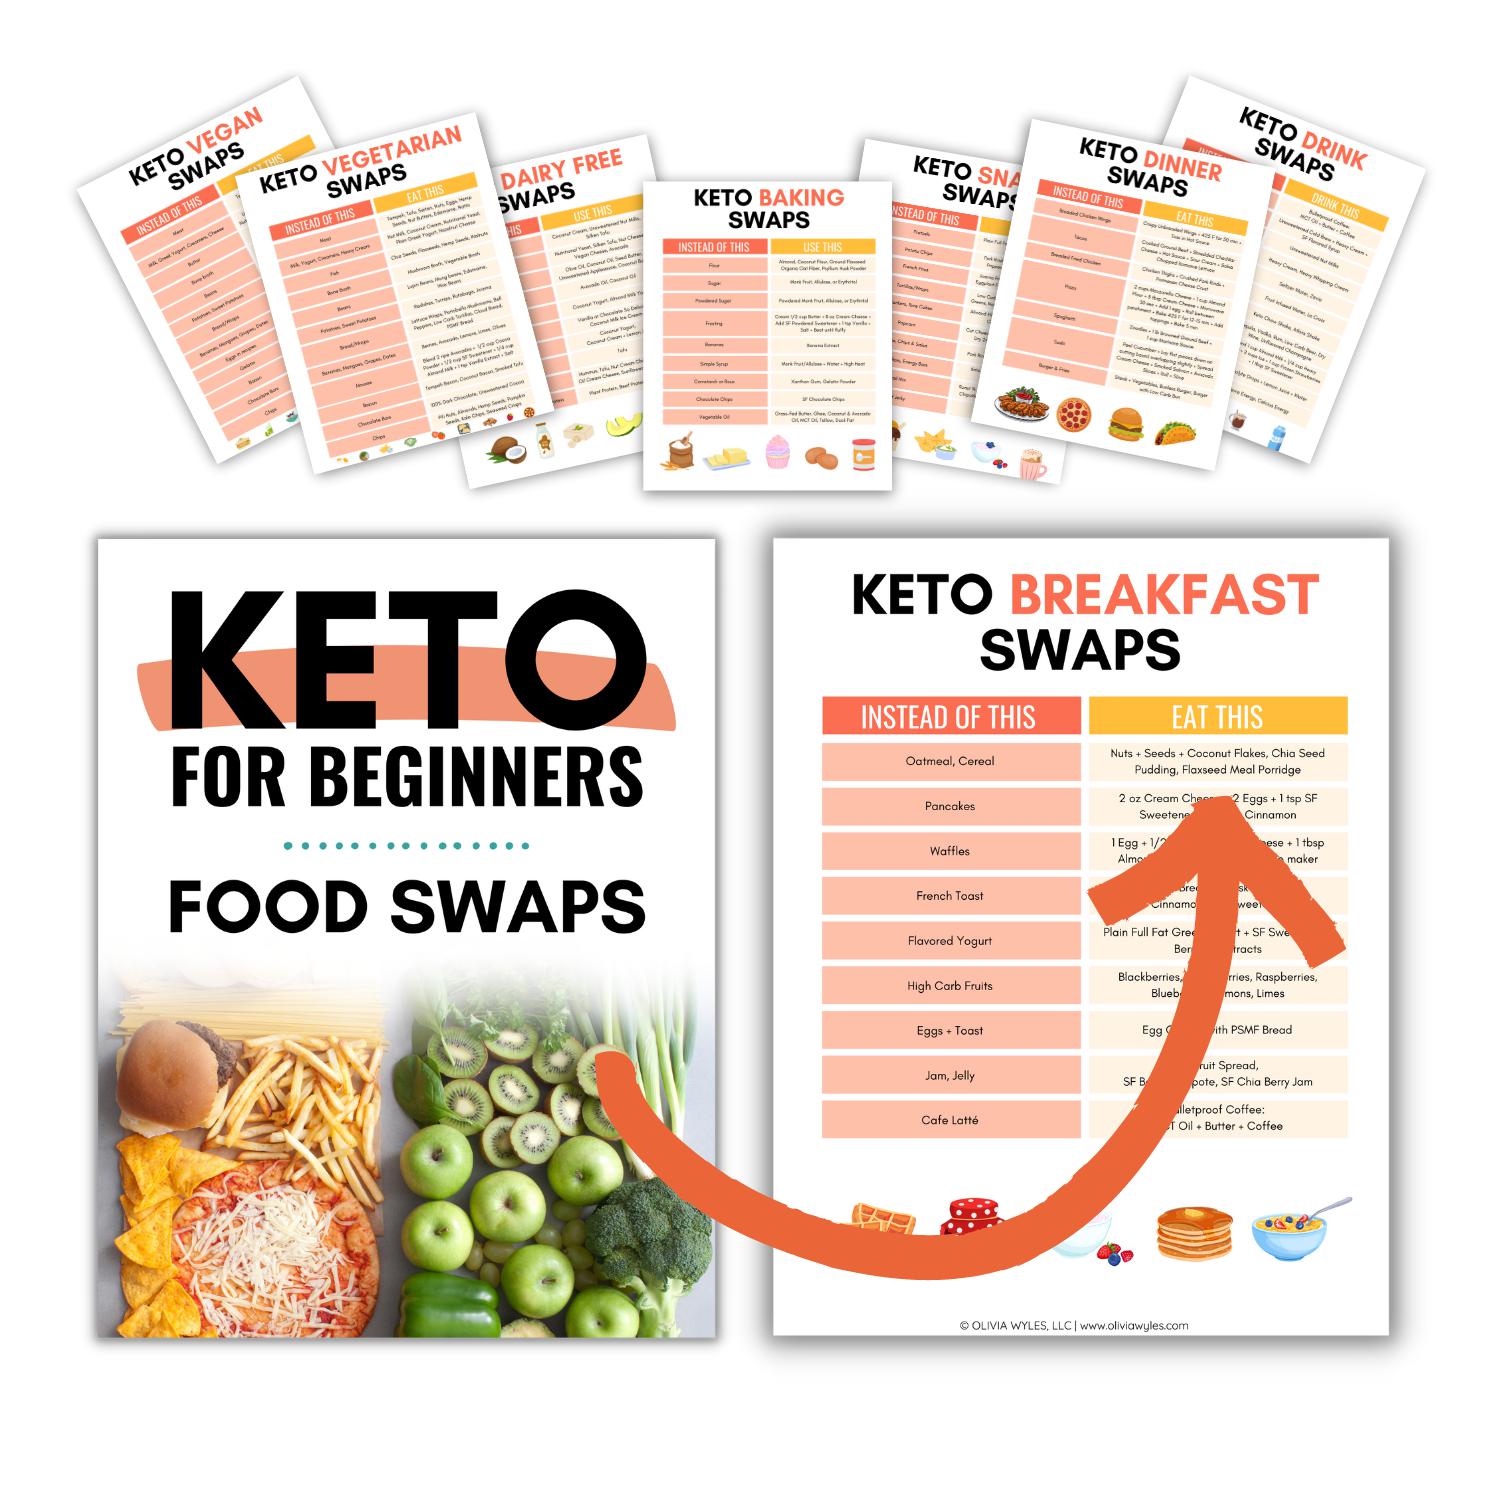 Keto for Beginners: Food Swaps